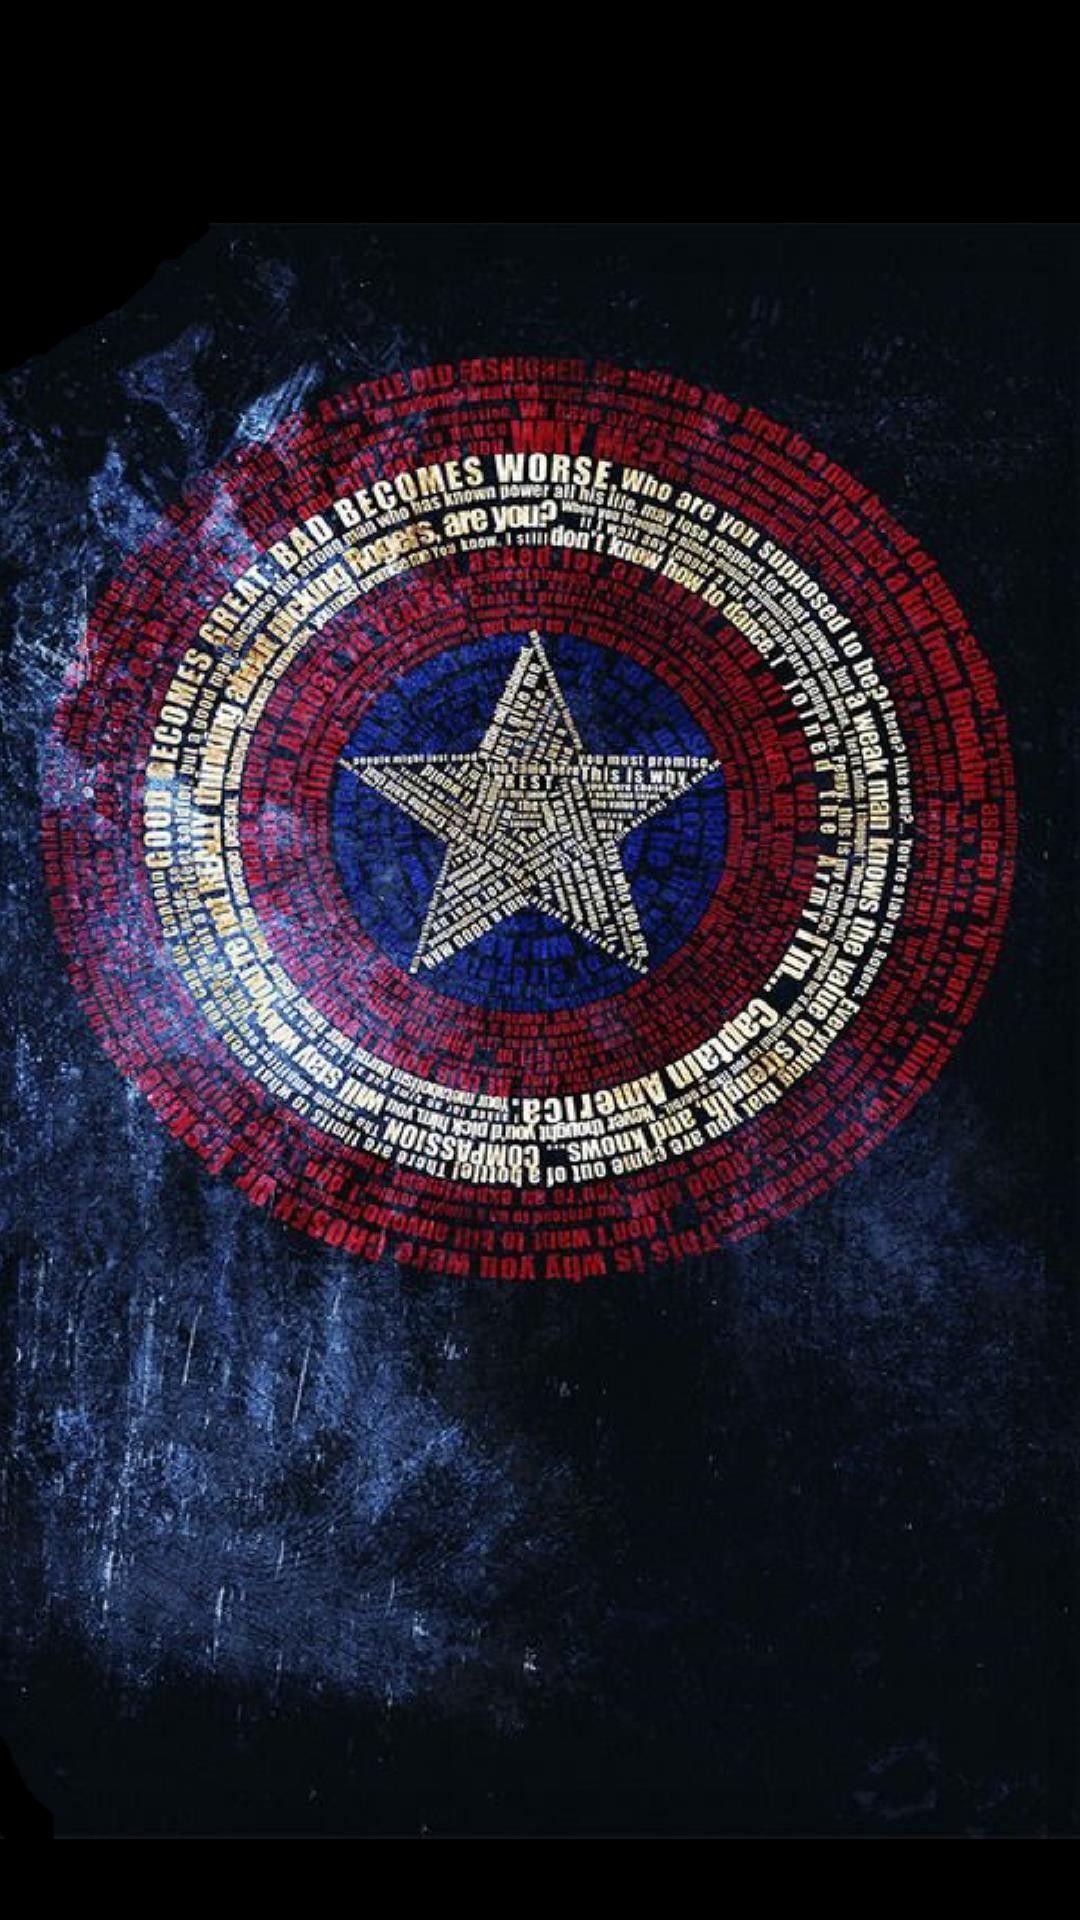 Captain America 4K Fanart Wallpapers